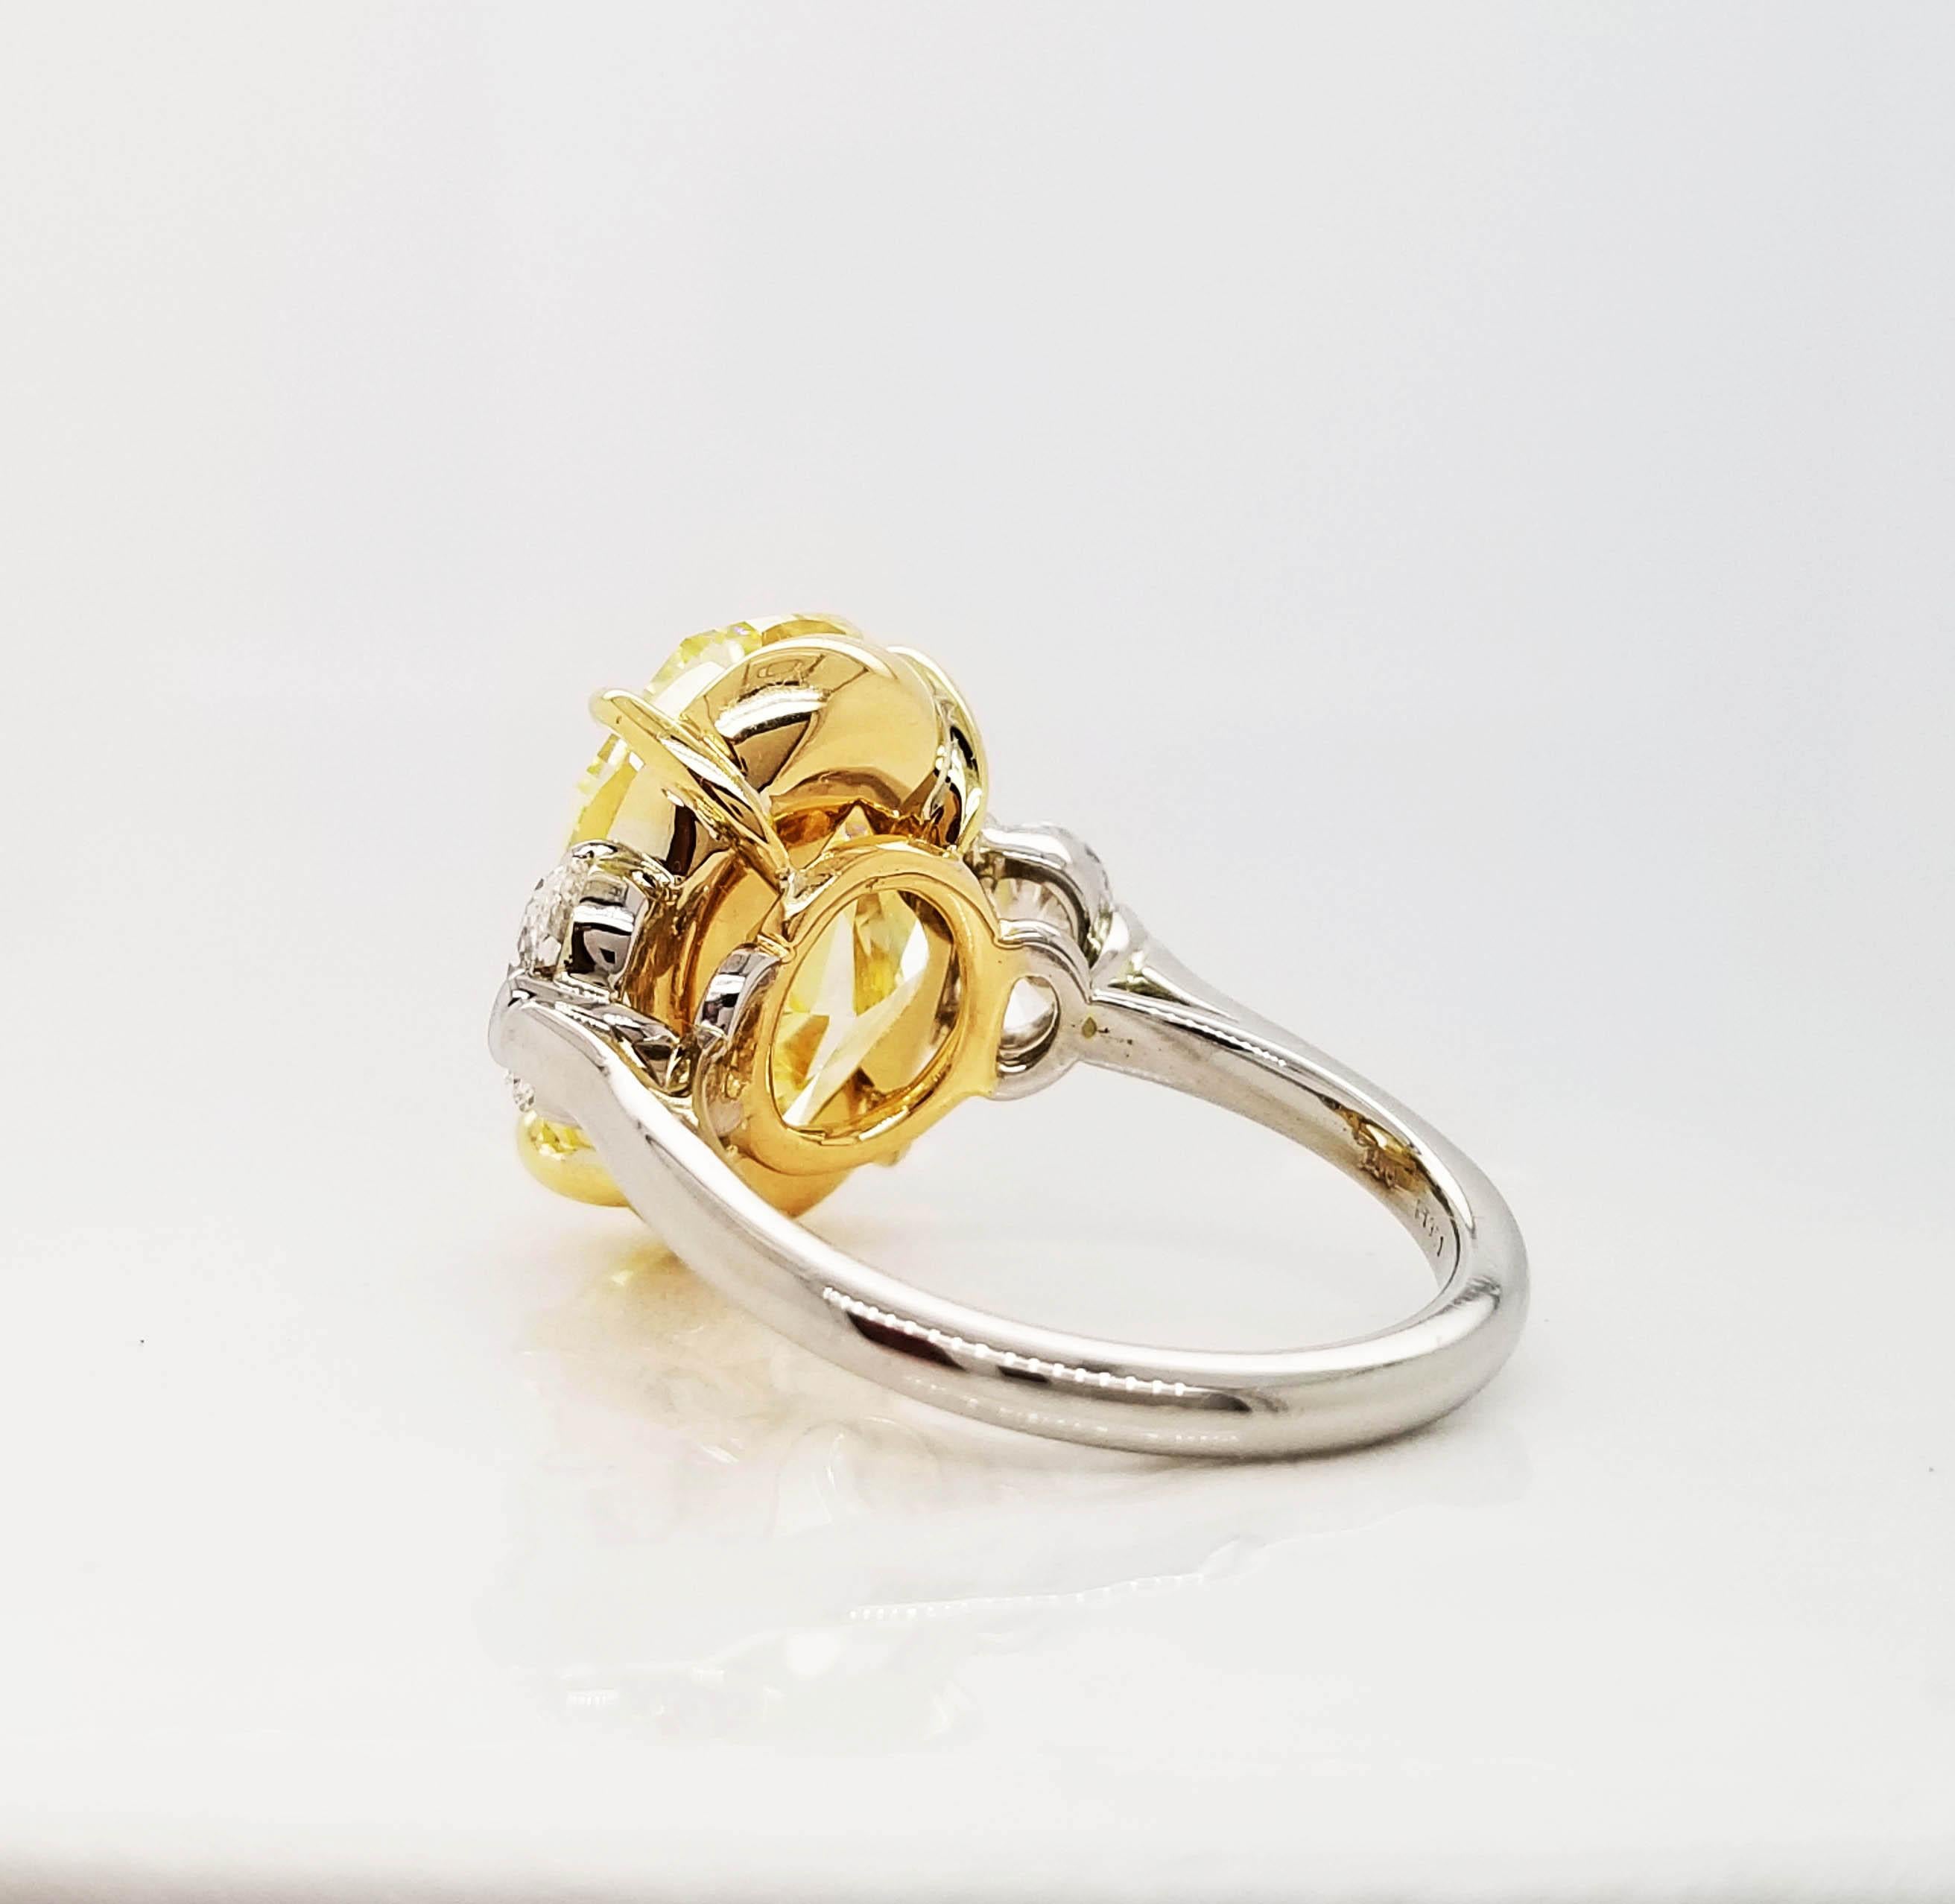 10 carat oval ring